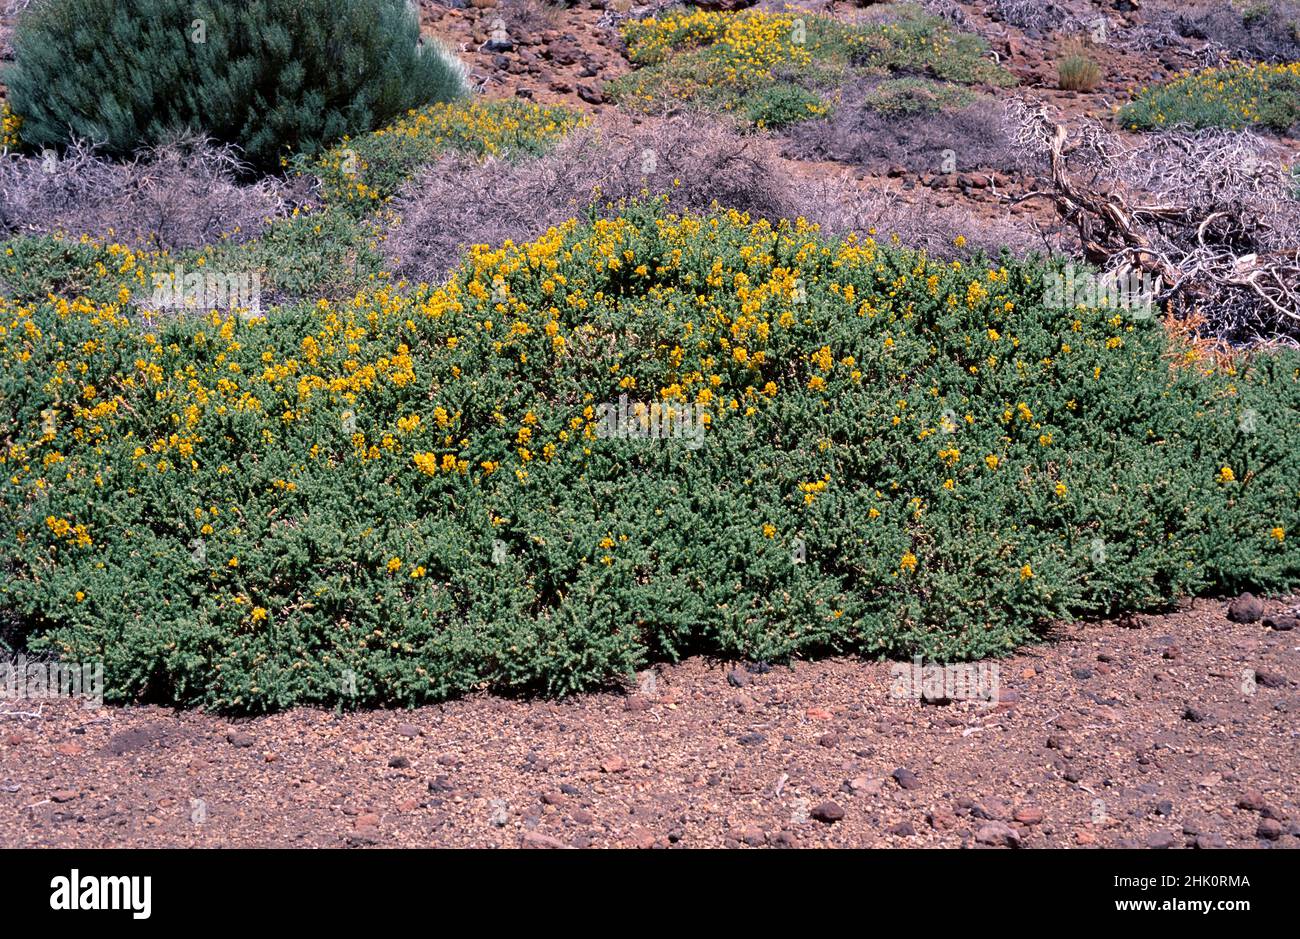 Codeso de cumbre (Adenocarpus viscosus) is a shrub endemic to Tenerife, La Gomera and La Palma. This photo was taken in Canadas del Teide National Stock Photo